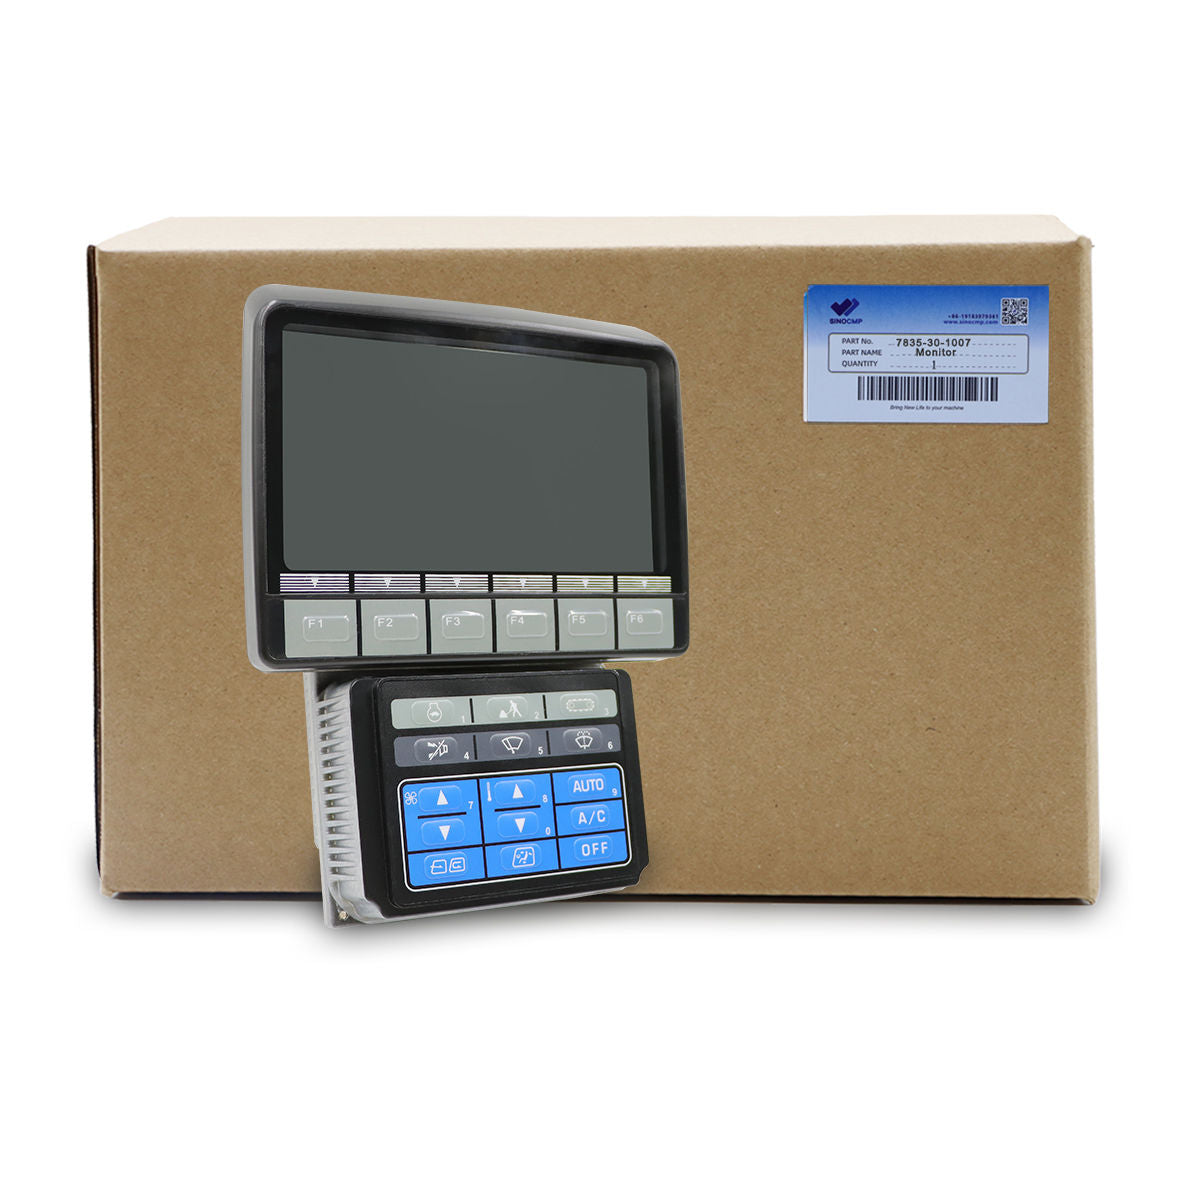 7835-30-1007 Monitor Display Panel for Komatsu PC200-8 PC220-8 PC270-8 - Sinocmp